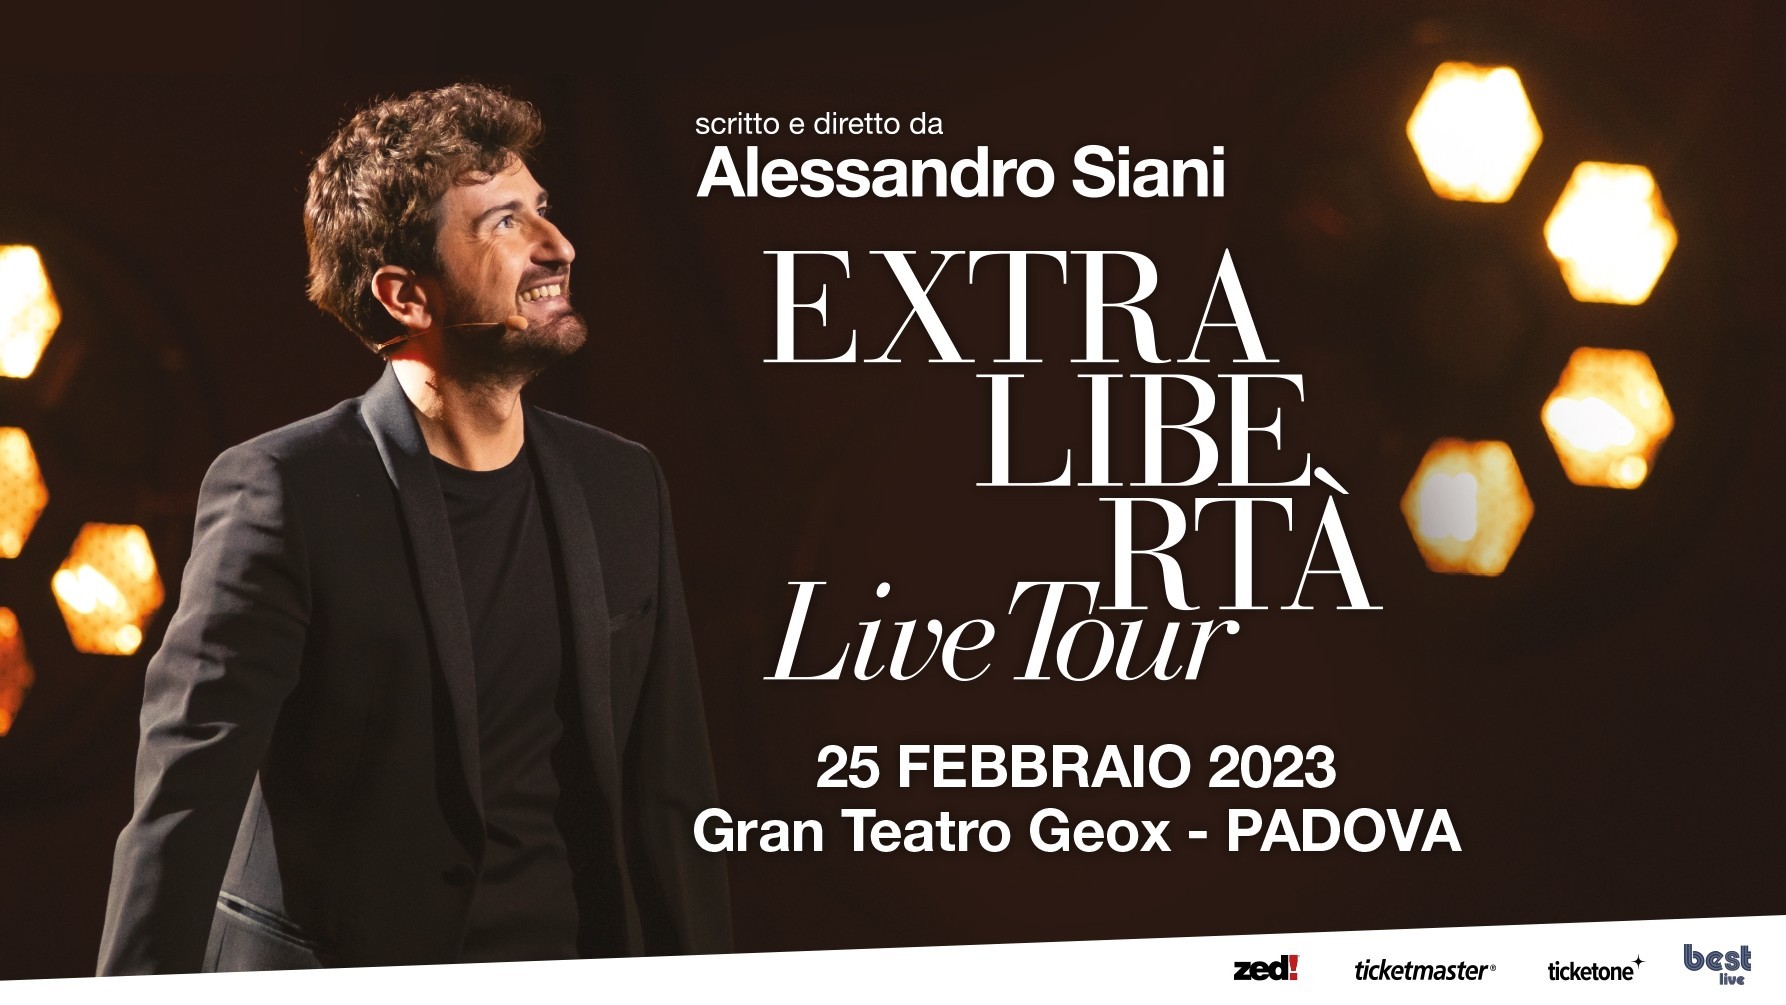 Alessandro Siani "Extra Libertà Live Tour"